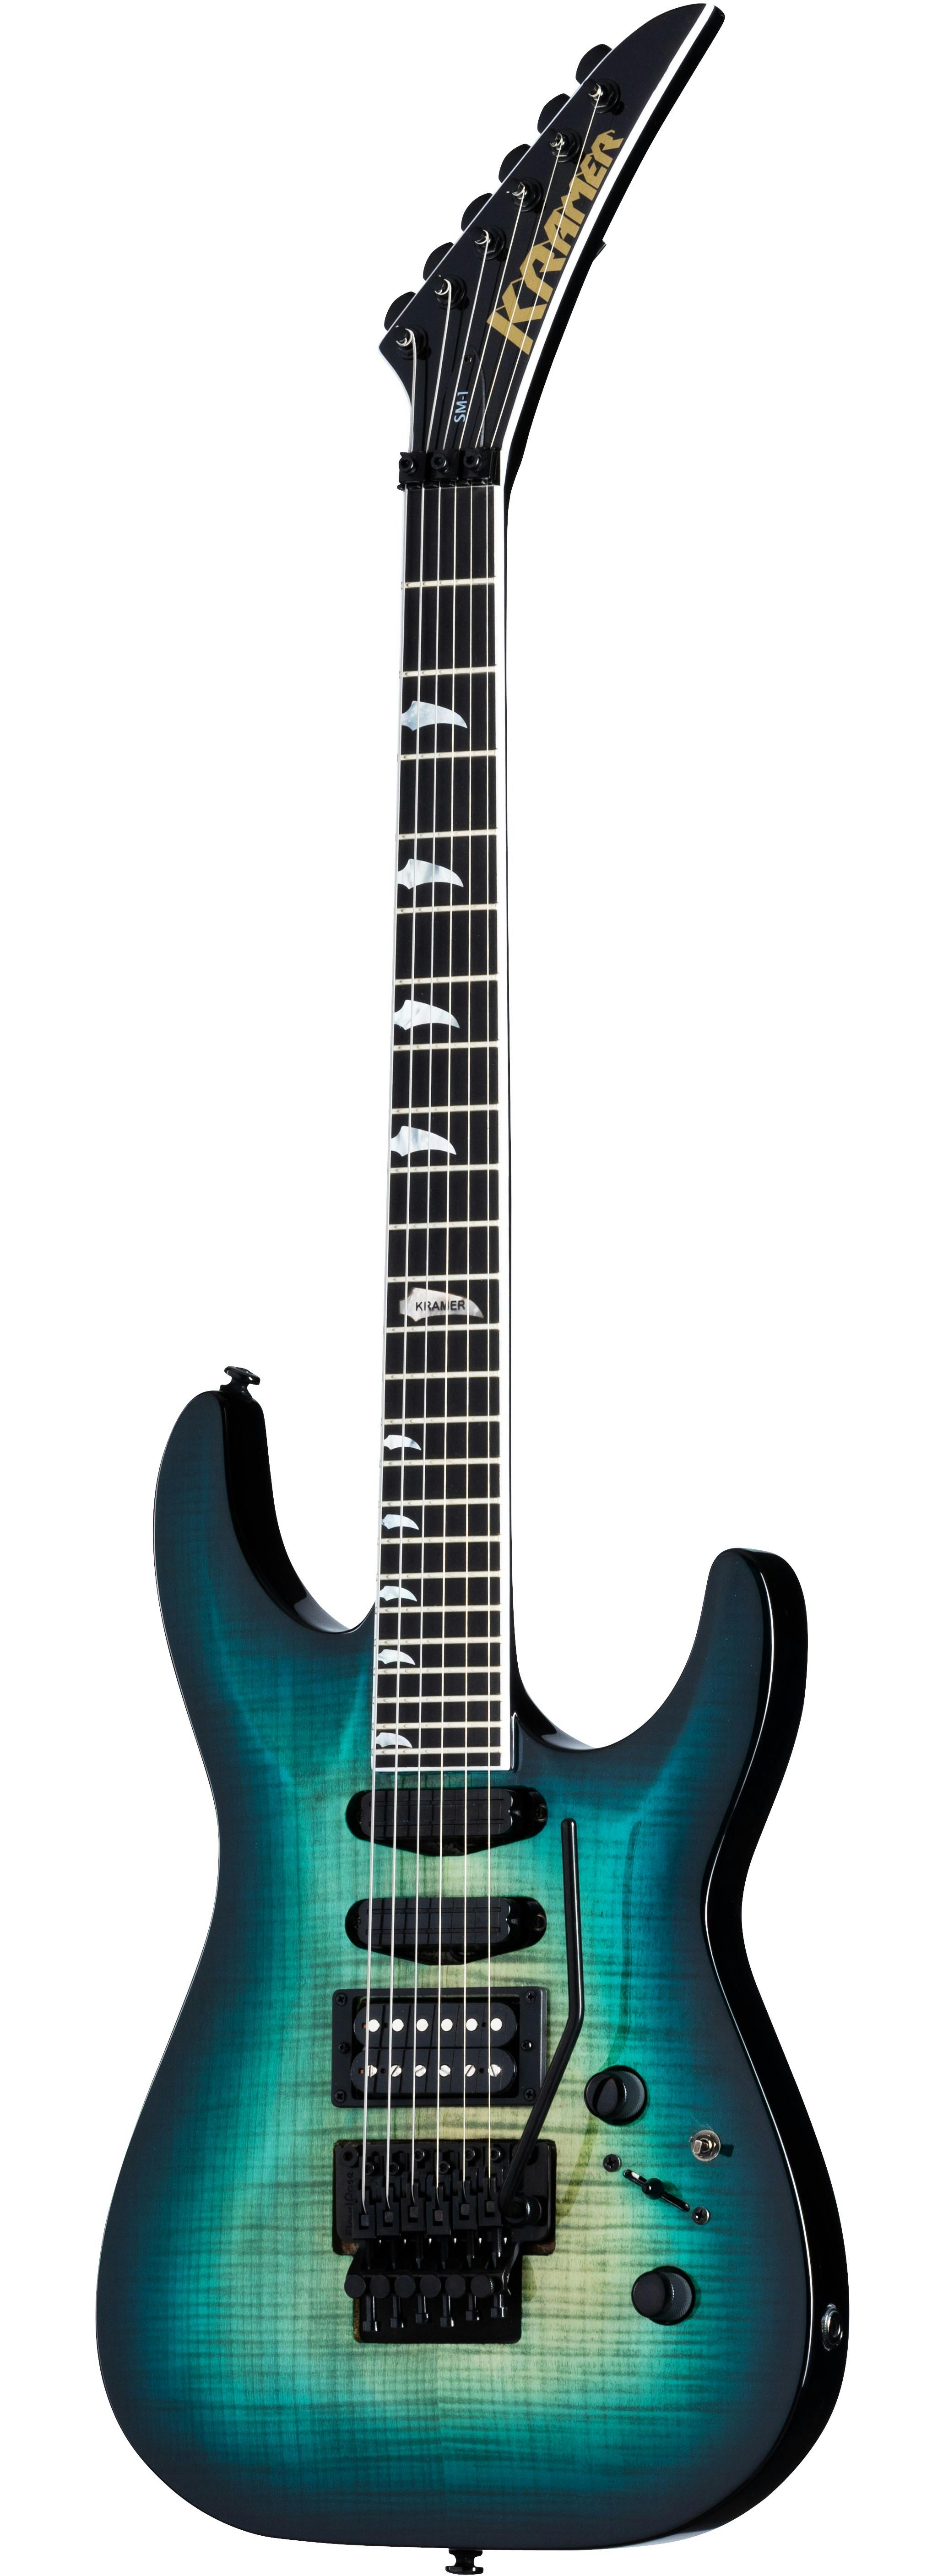 Kramer SM-1 Figured Electric Guitar in Caribbean Blue Perimeter